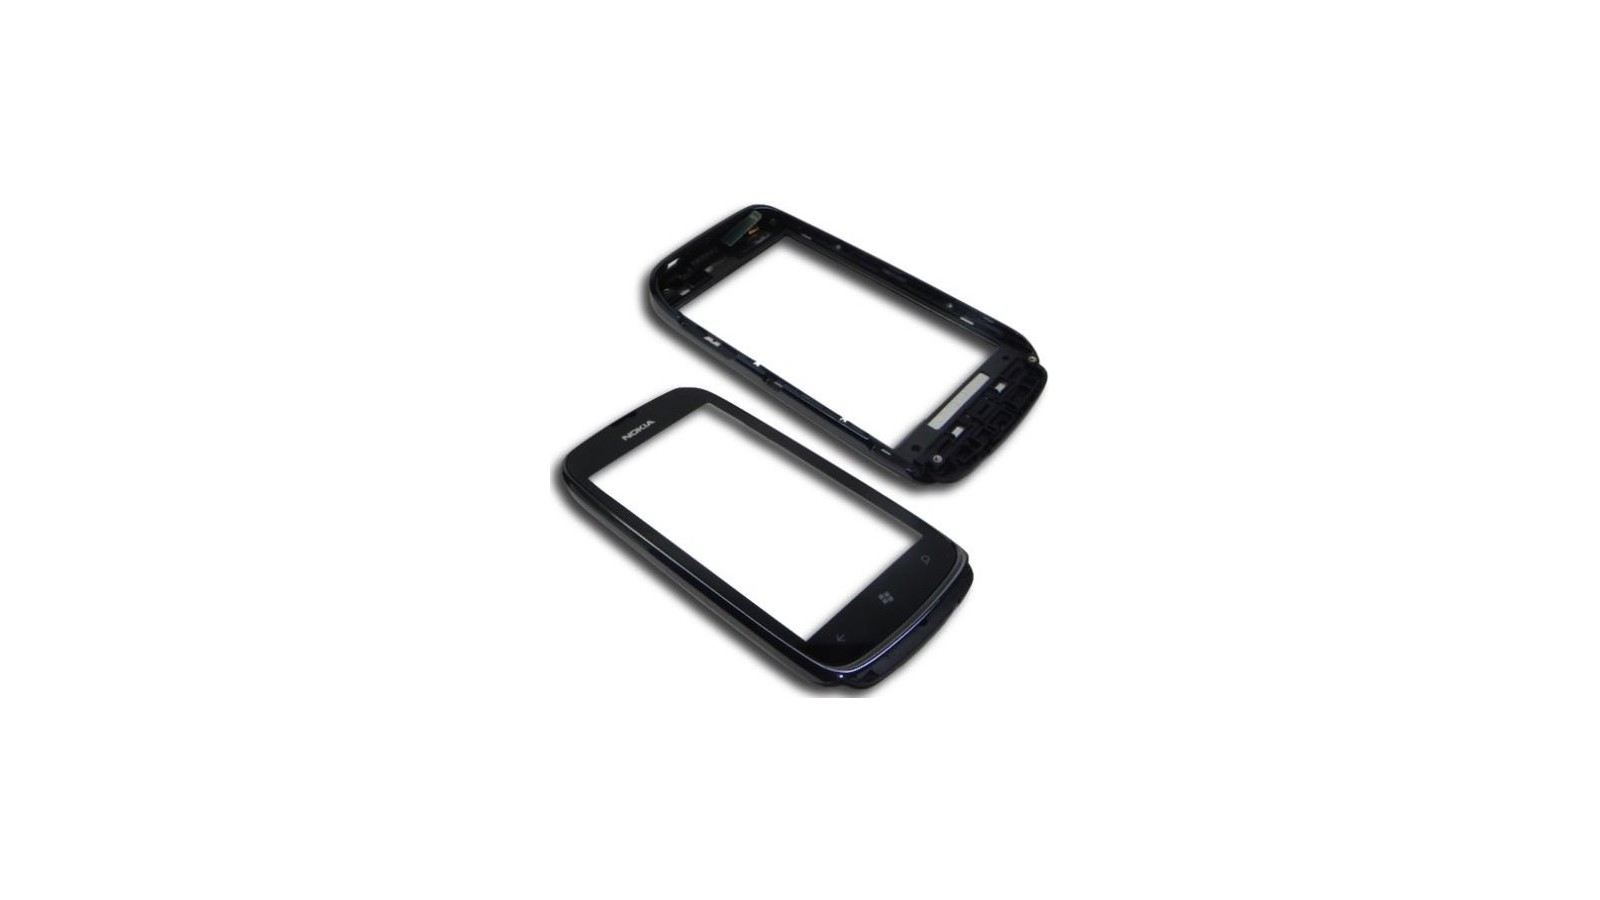 Touch Screen Vetro Nokia Lumia 610 completo cornice frame